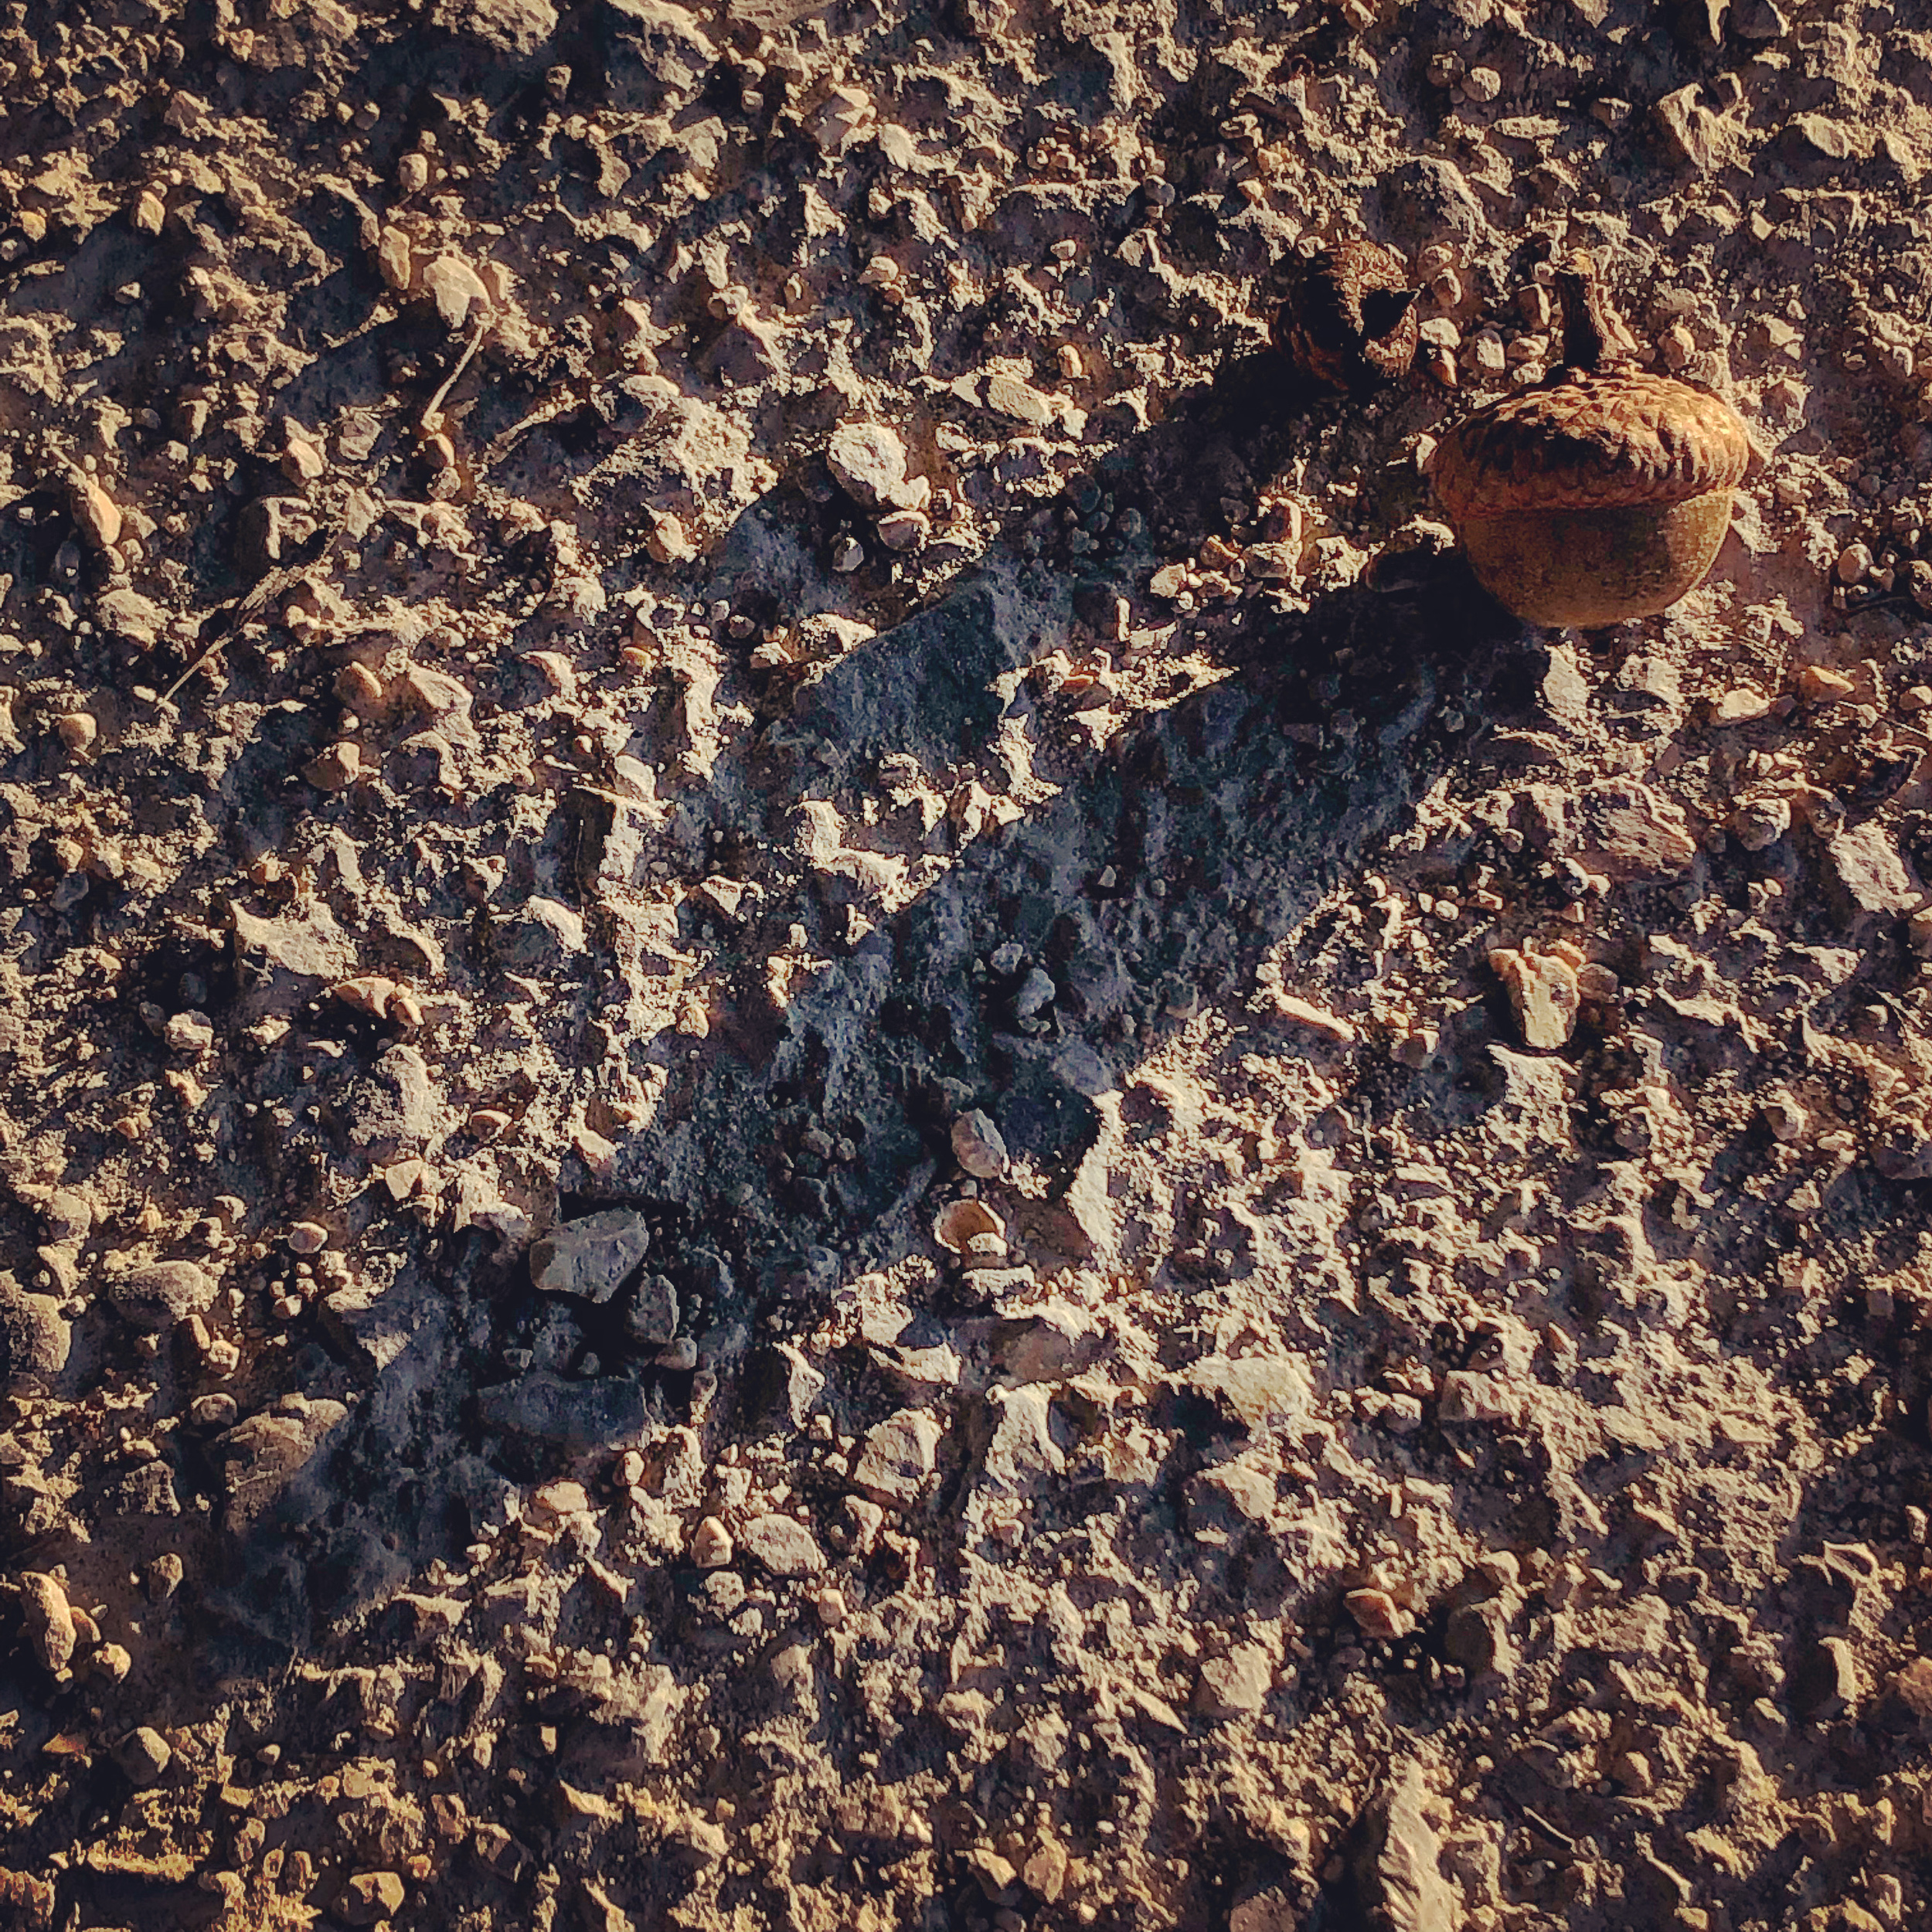 The long shadow of an acorn